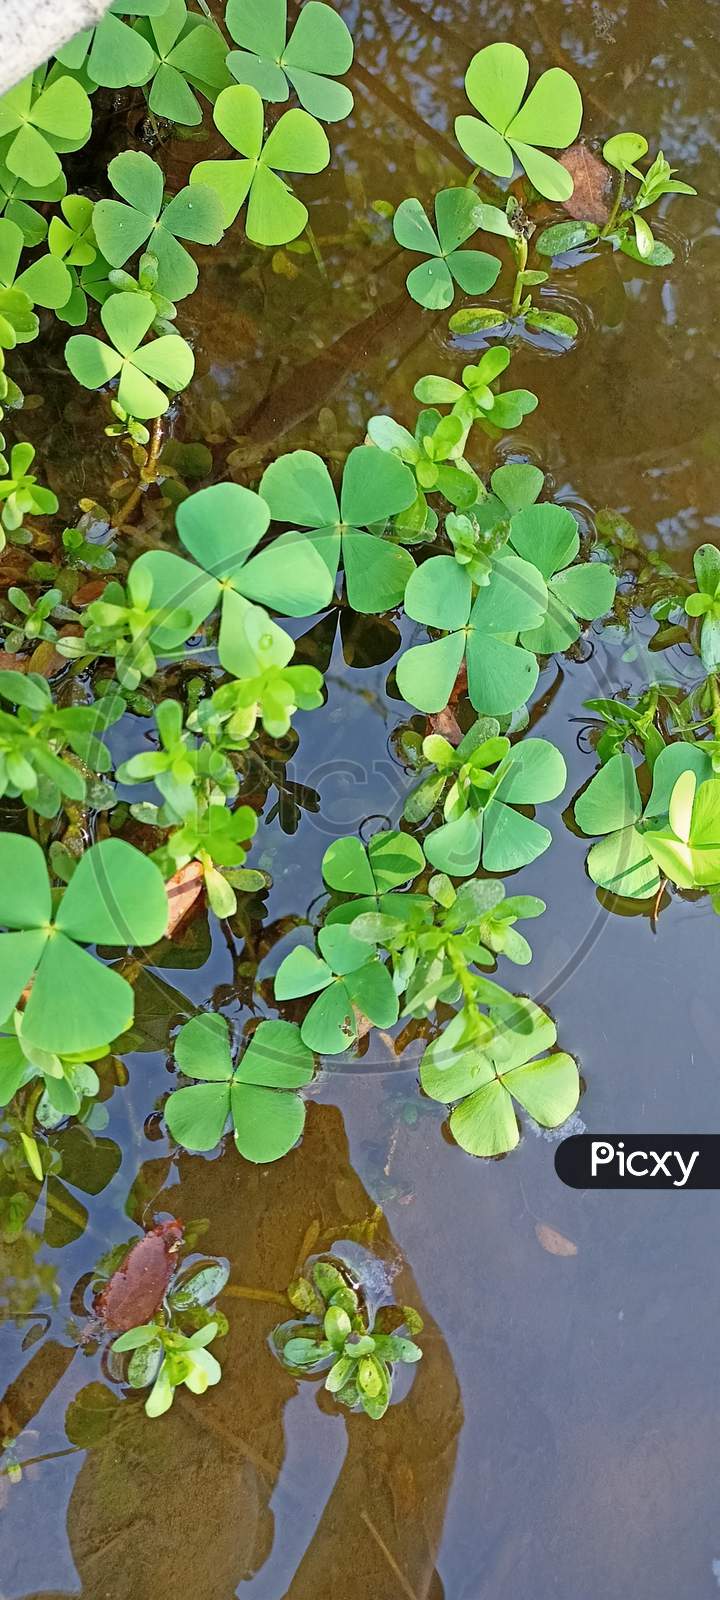 Water ferns Plant, india, Gujarat